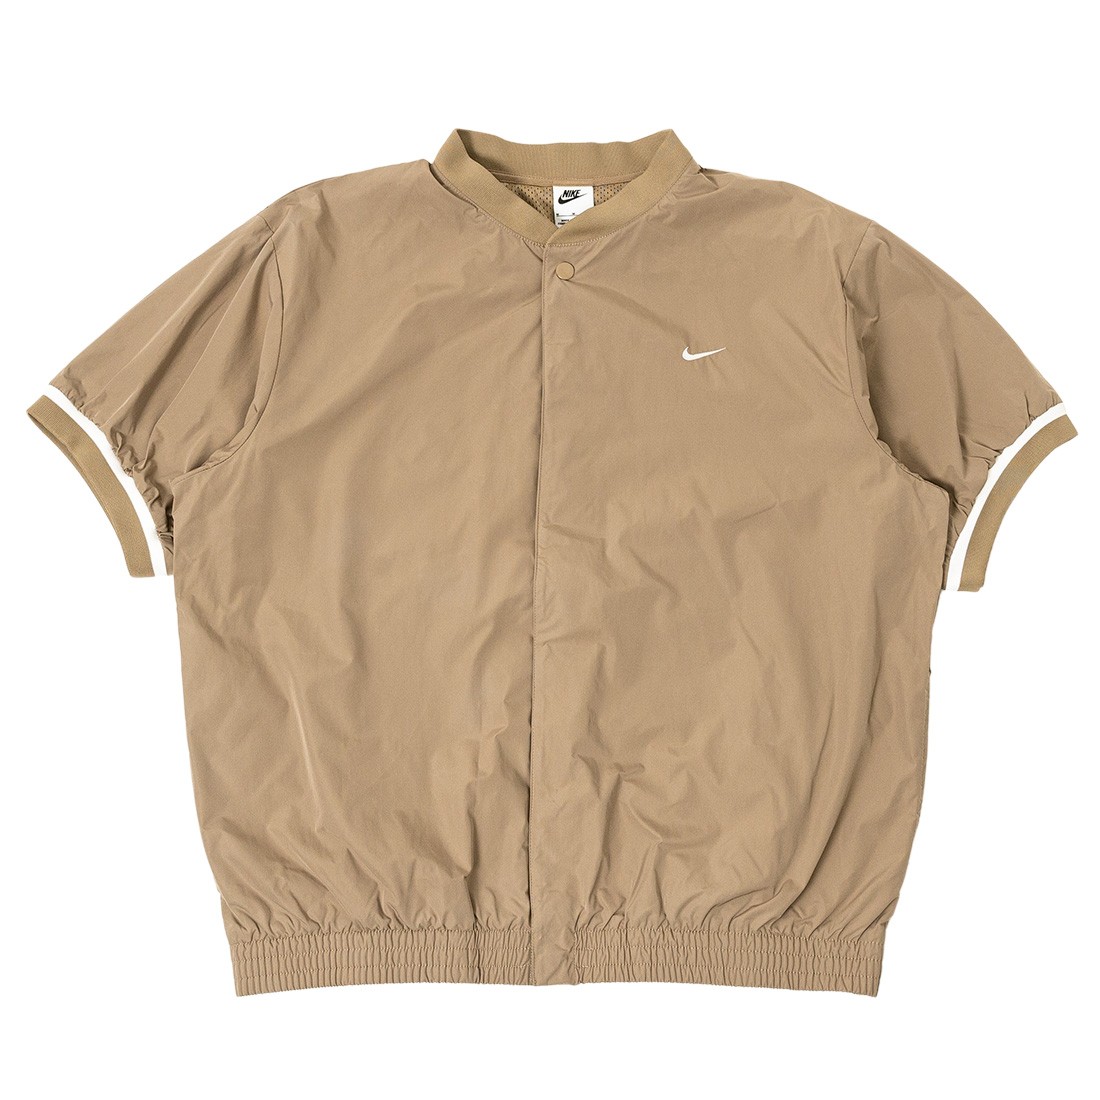 Nike Authentics Men's Warm-Up Shirt